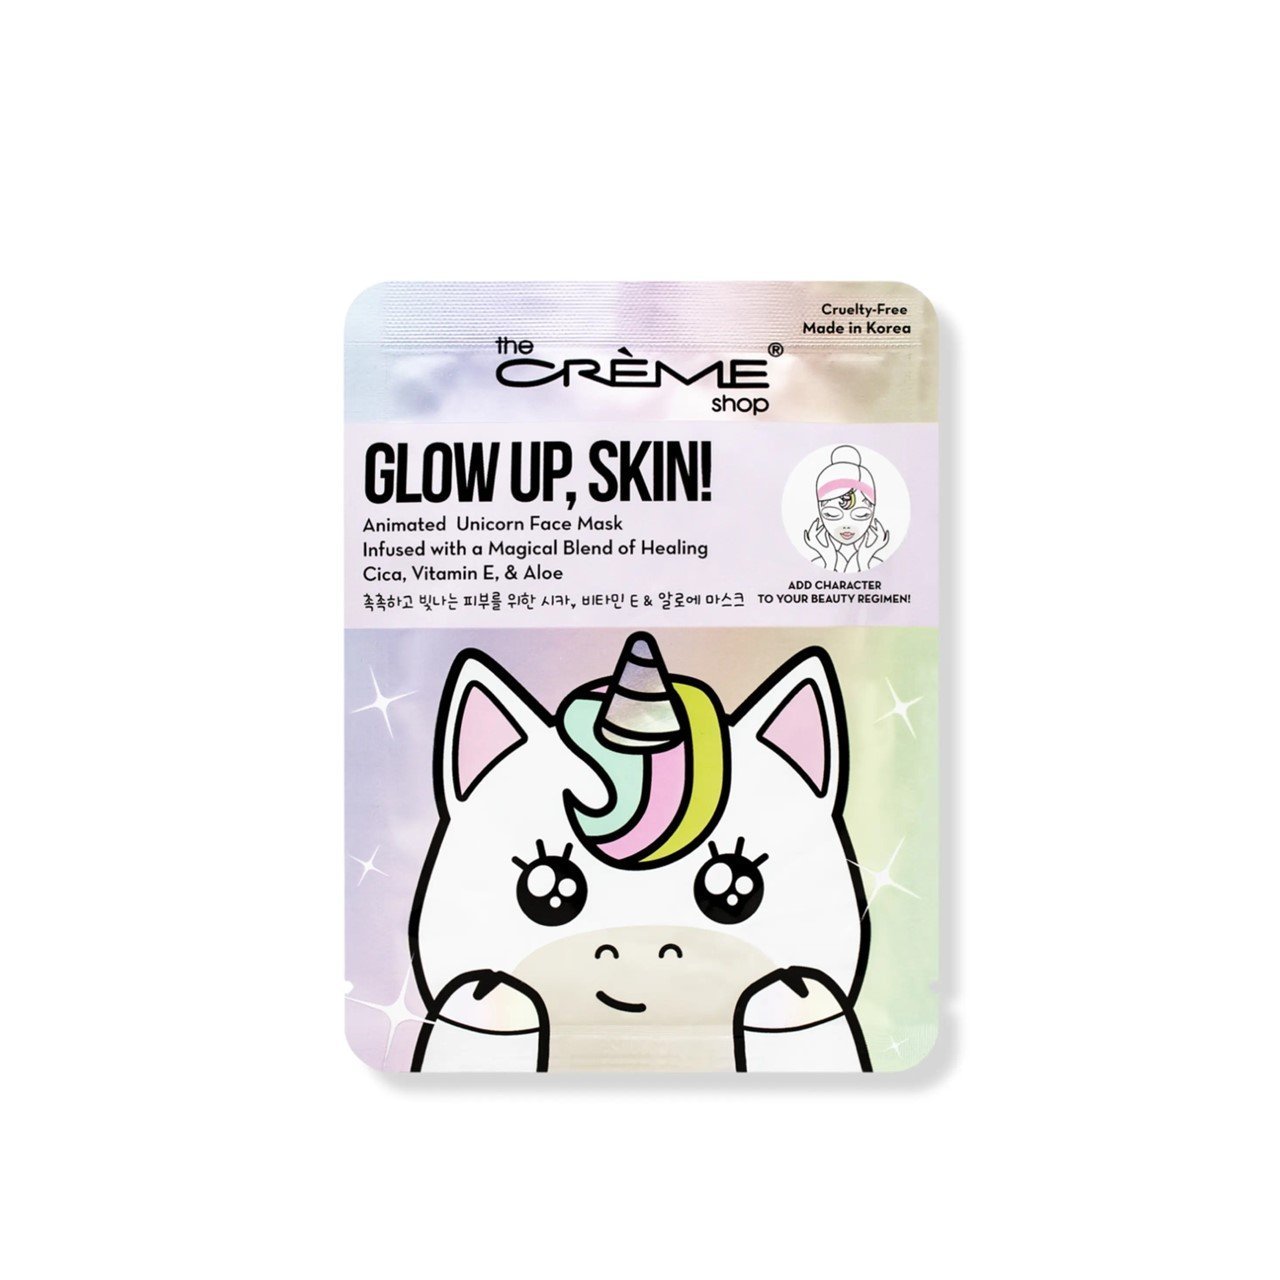 The Crème Shop Glow Up, Skin! Animated Unicorn Face Mask 25g